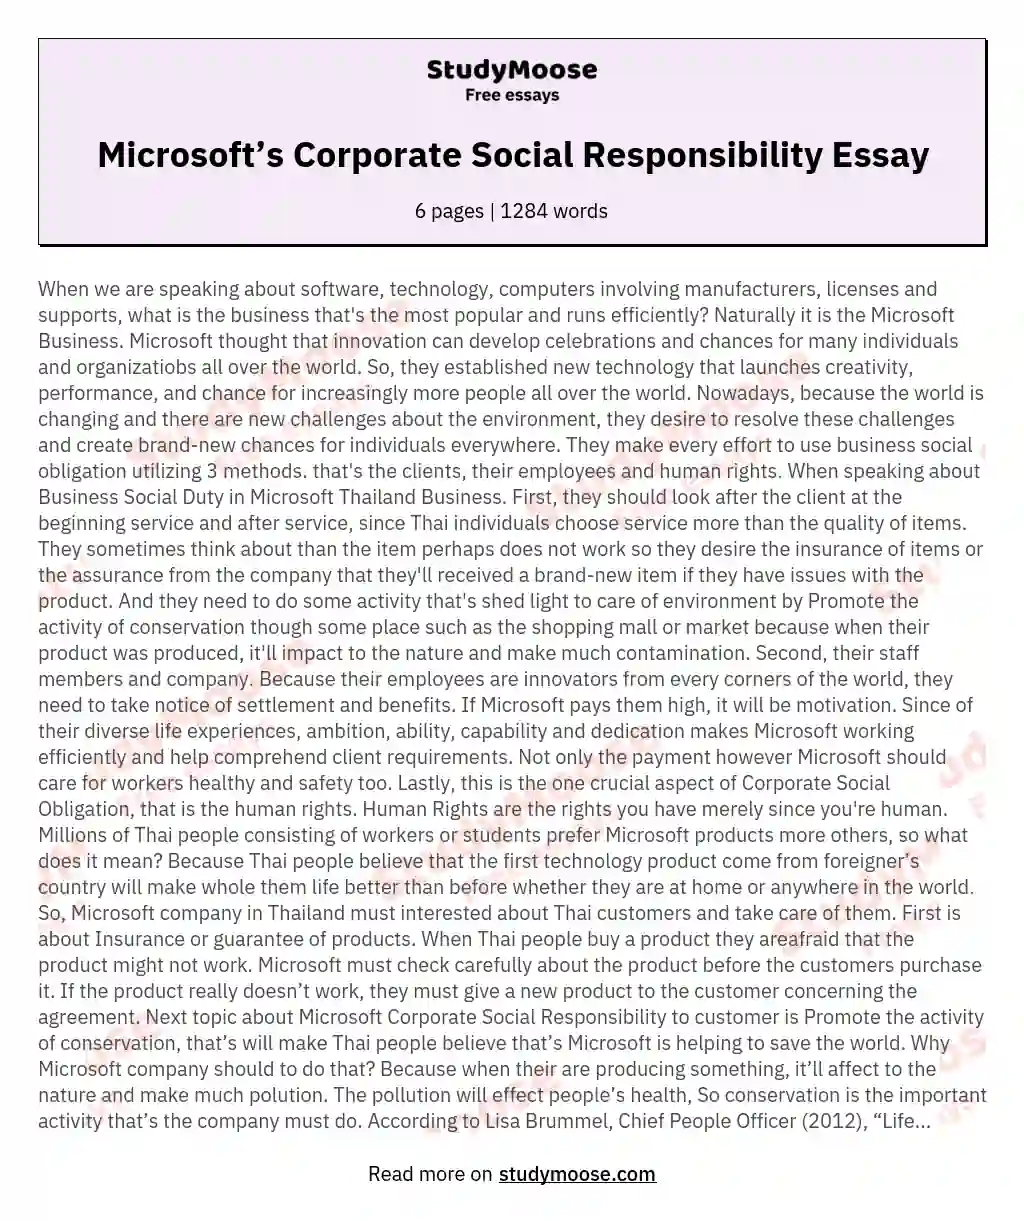 Microsoft’s Corporate Social Responsibility Essay